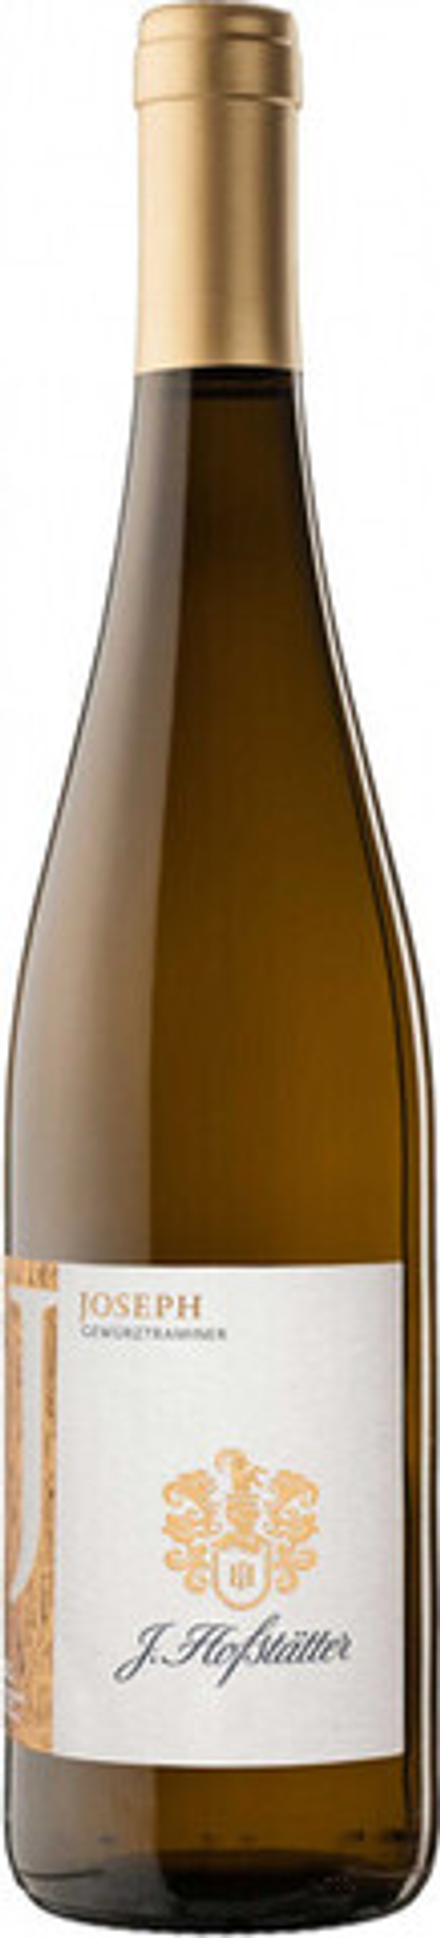 Вино Hofstatter Joseph Gewurztraminer Alto Adige DOC, 0,75 л.